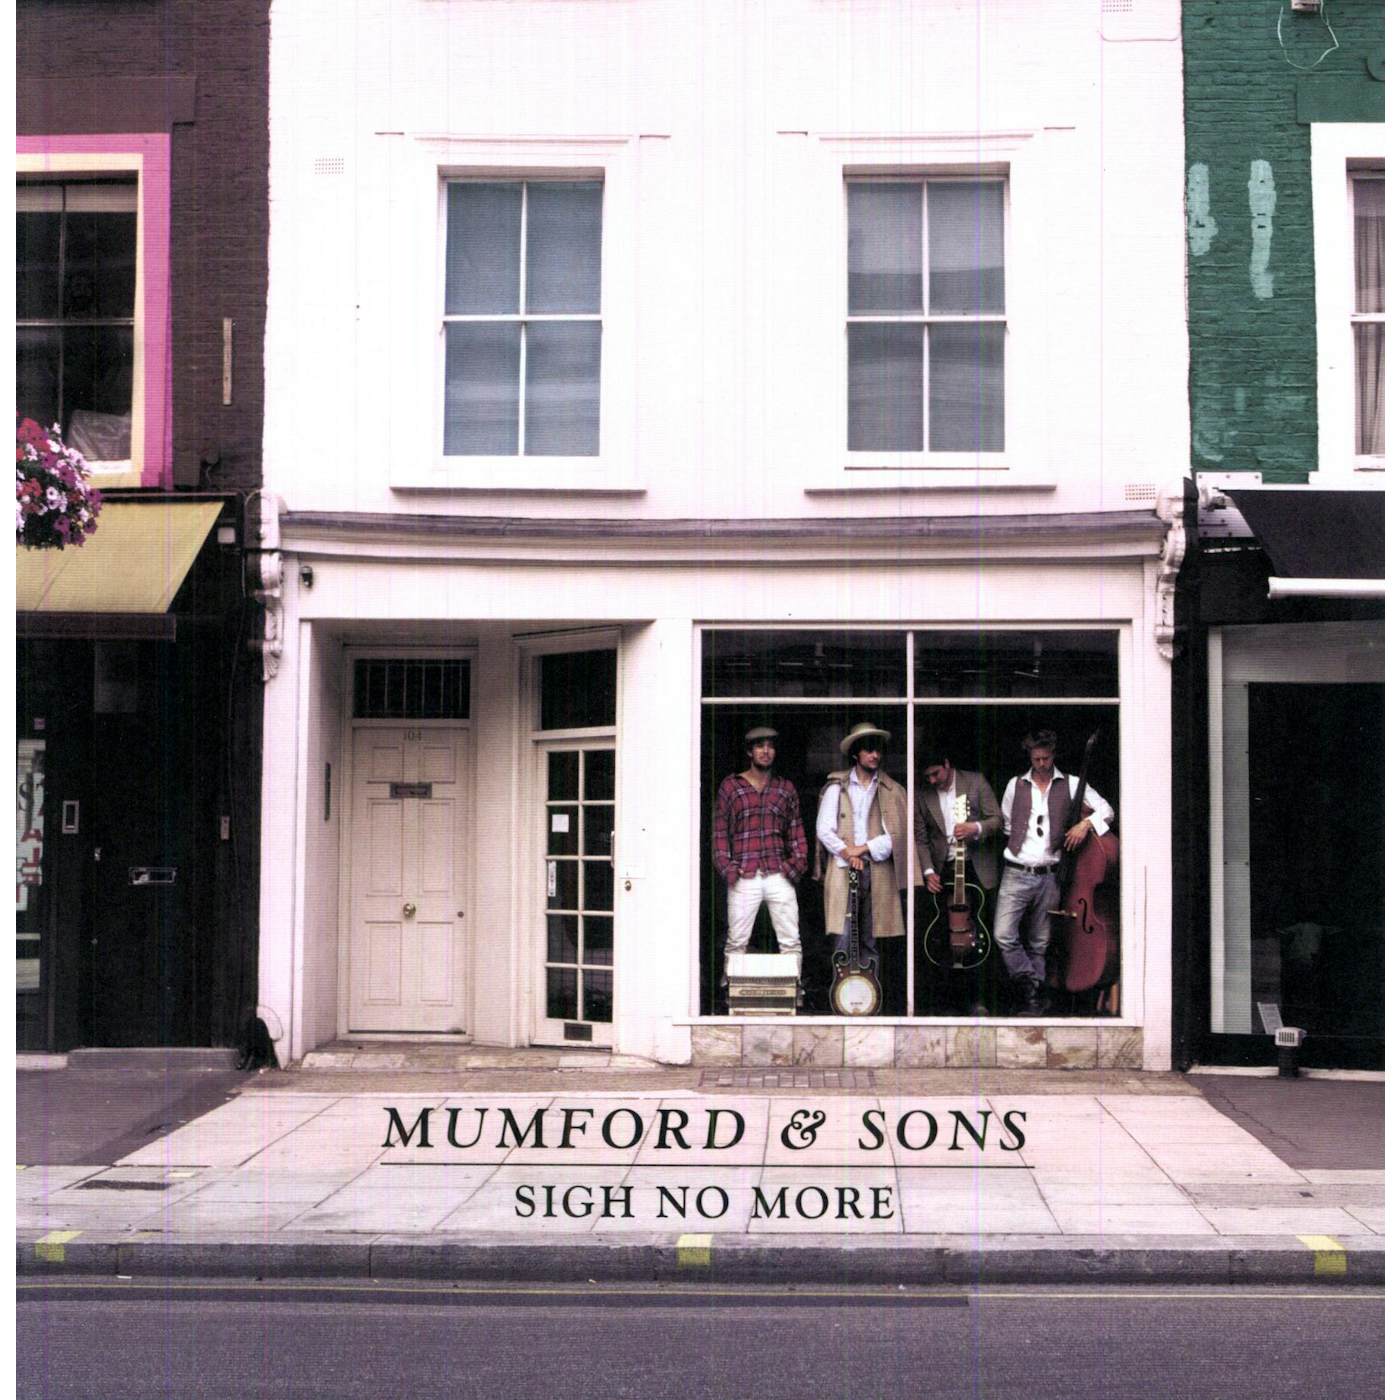 Mumford & Sons Sigh No More Vinyl Record